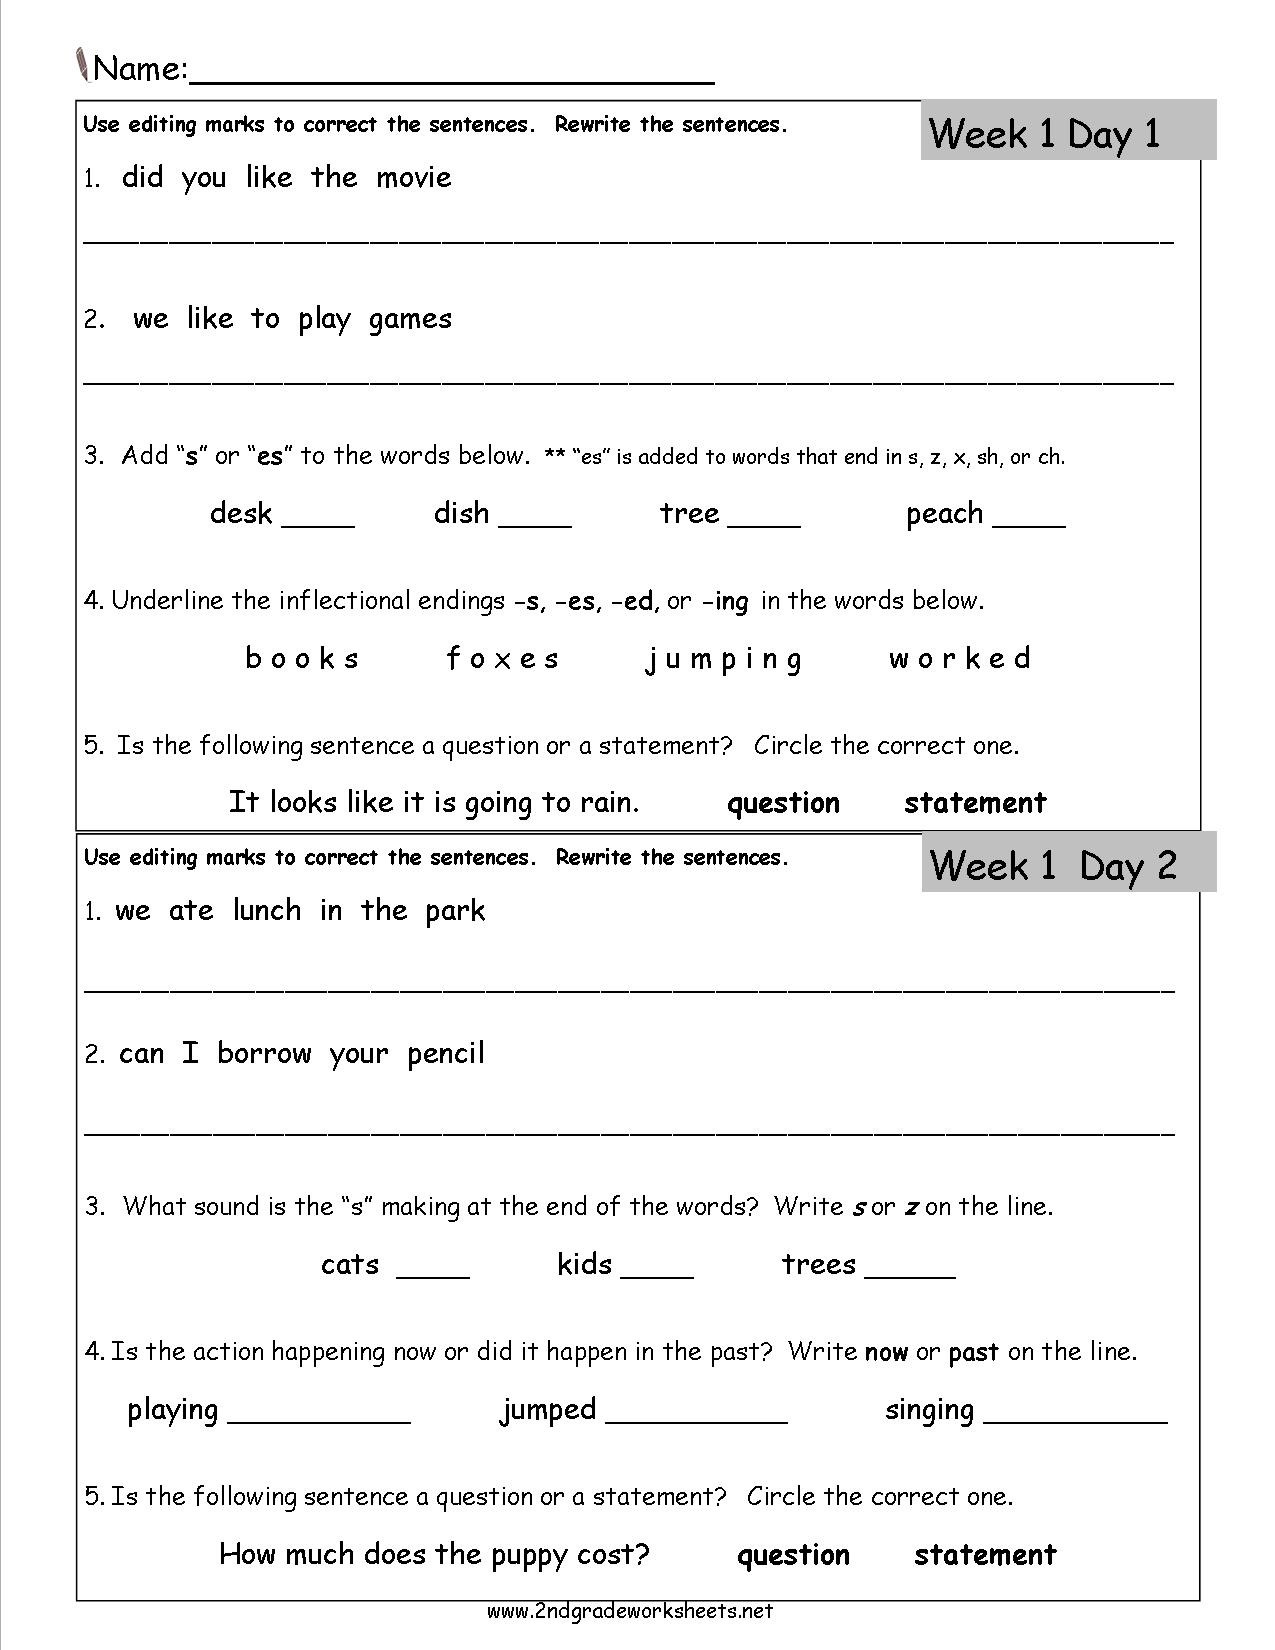 Inflected Endings Worksheets 2nd Grade 2ndgradeworksheets Free 2nd Grade Worksheets